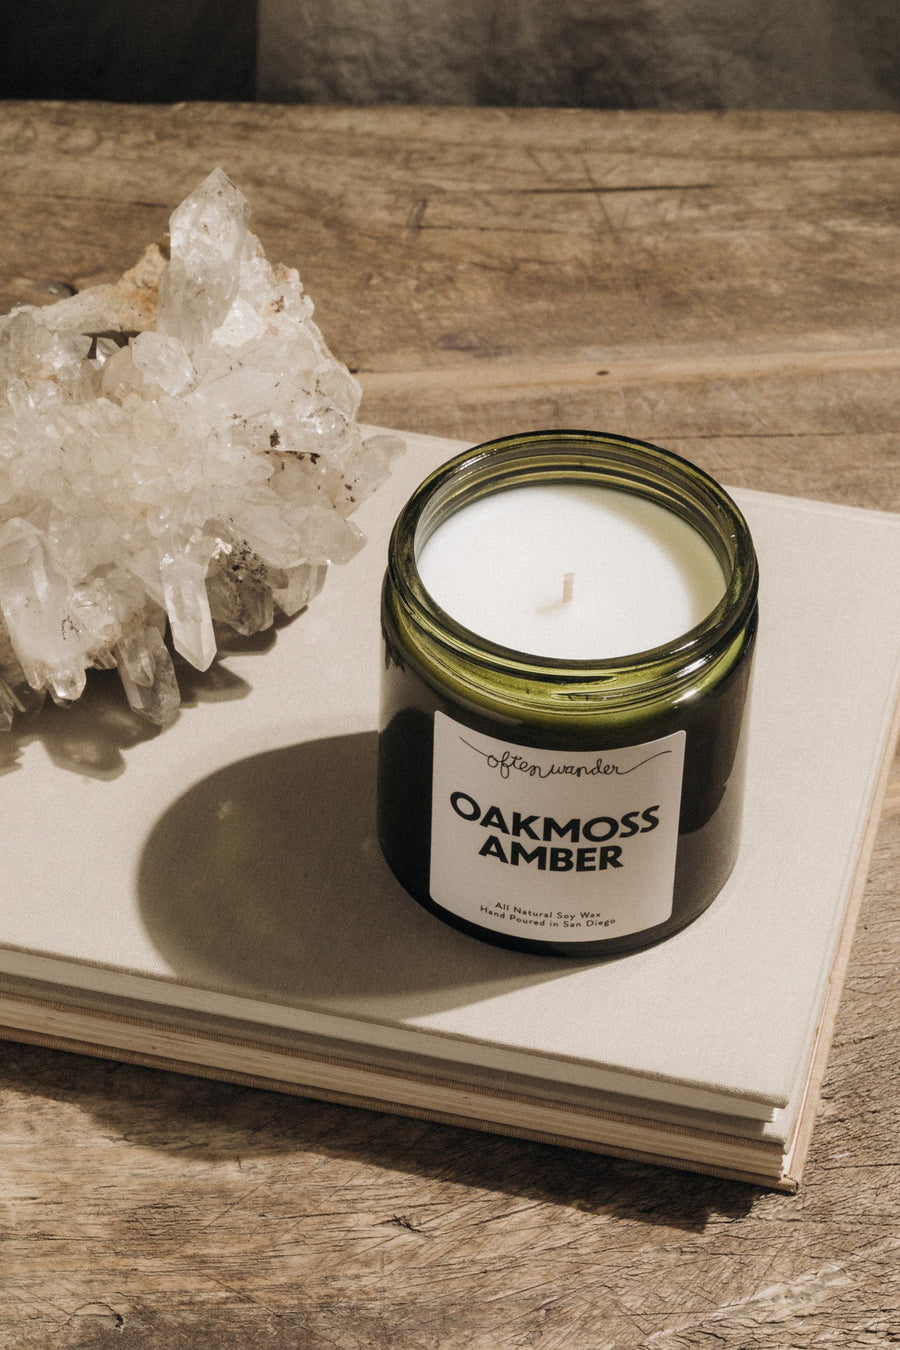 Often Wander Objects Signature Candle — Oakmoss Amber